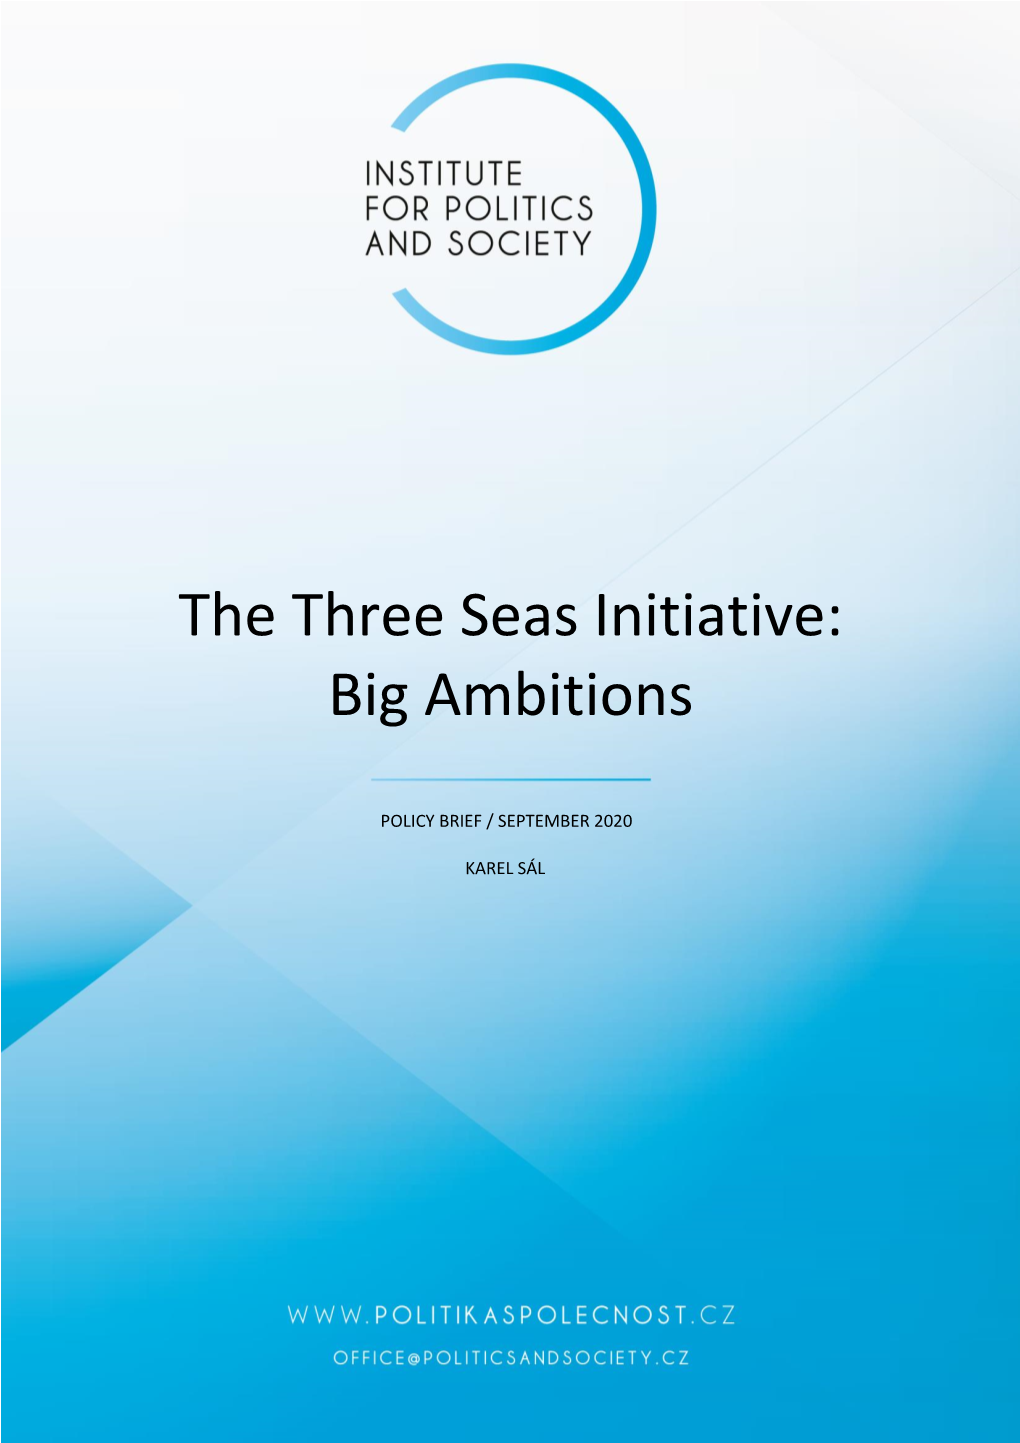 The Three Seas Initiative: Big Ambitions